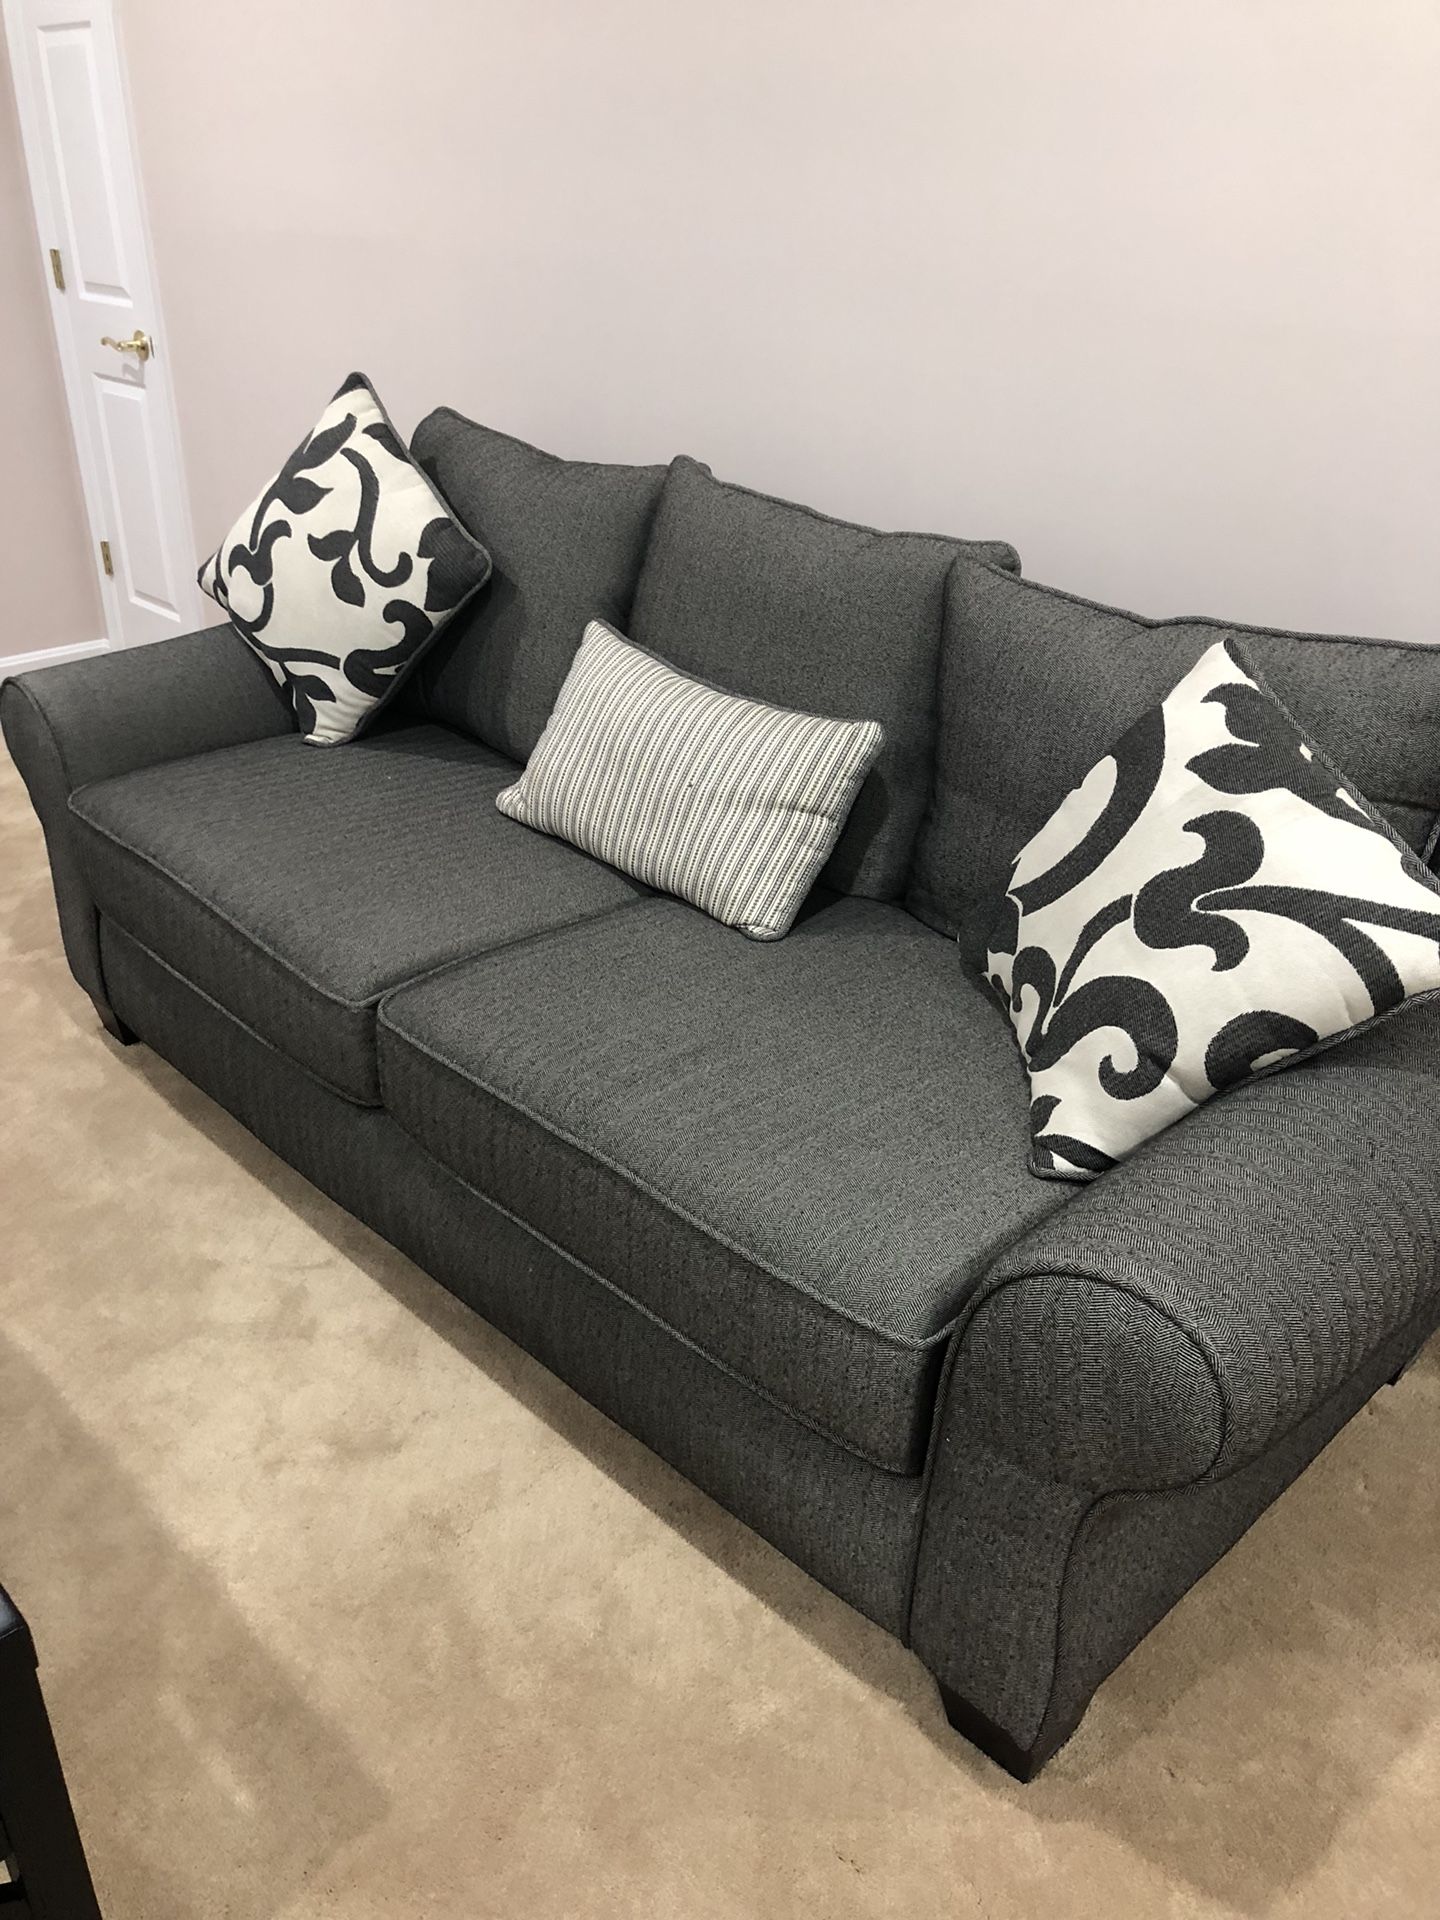 Sofa, 2 armchairs, ottoman, and coffee table